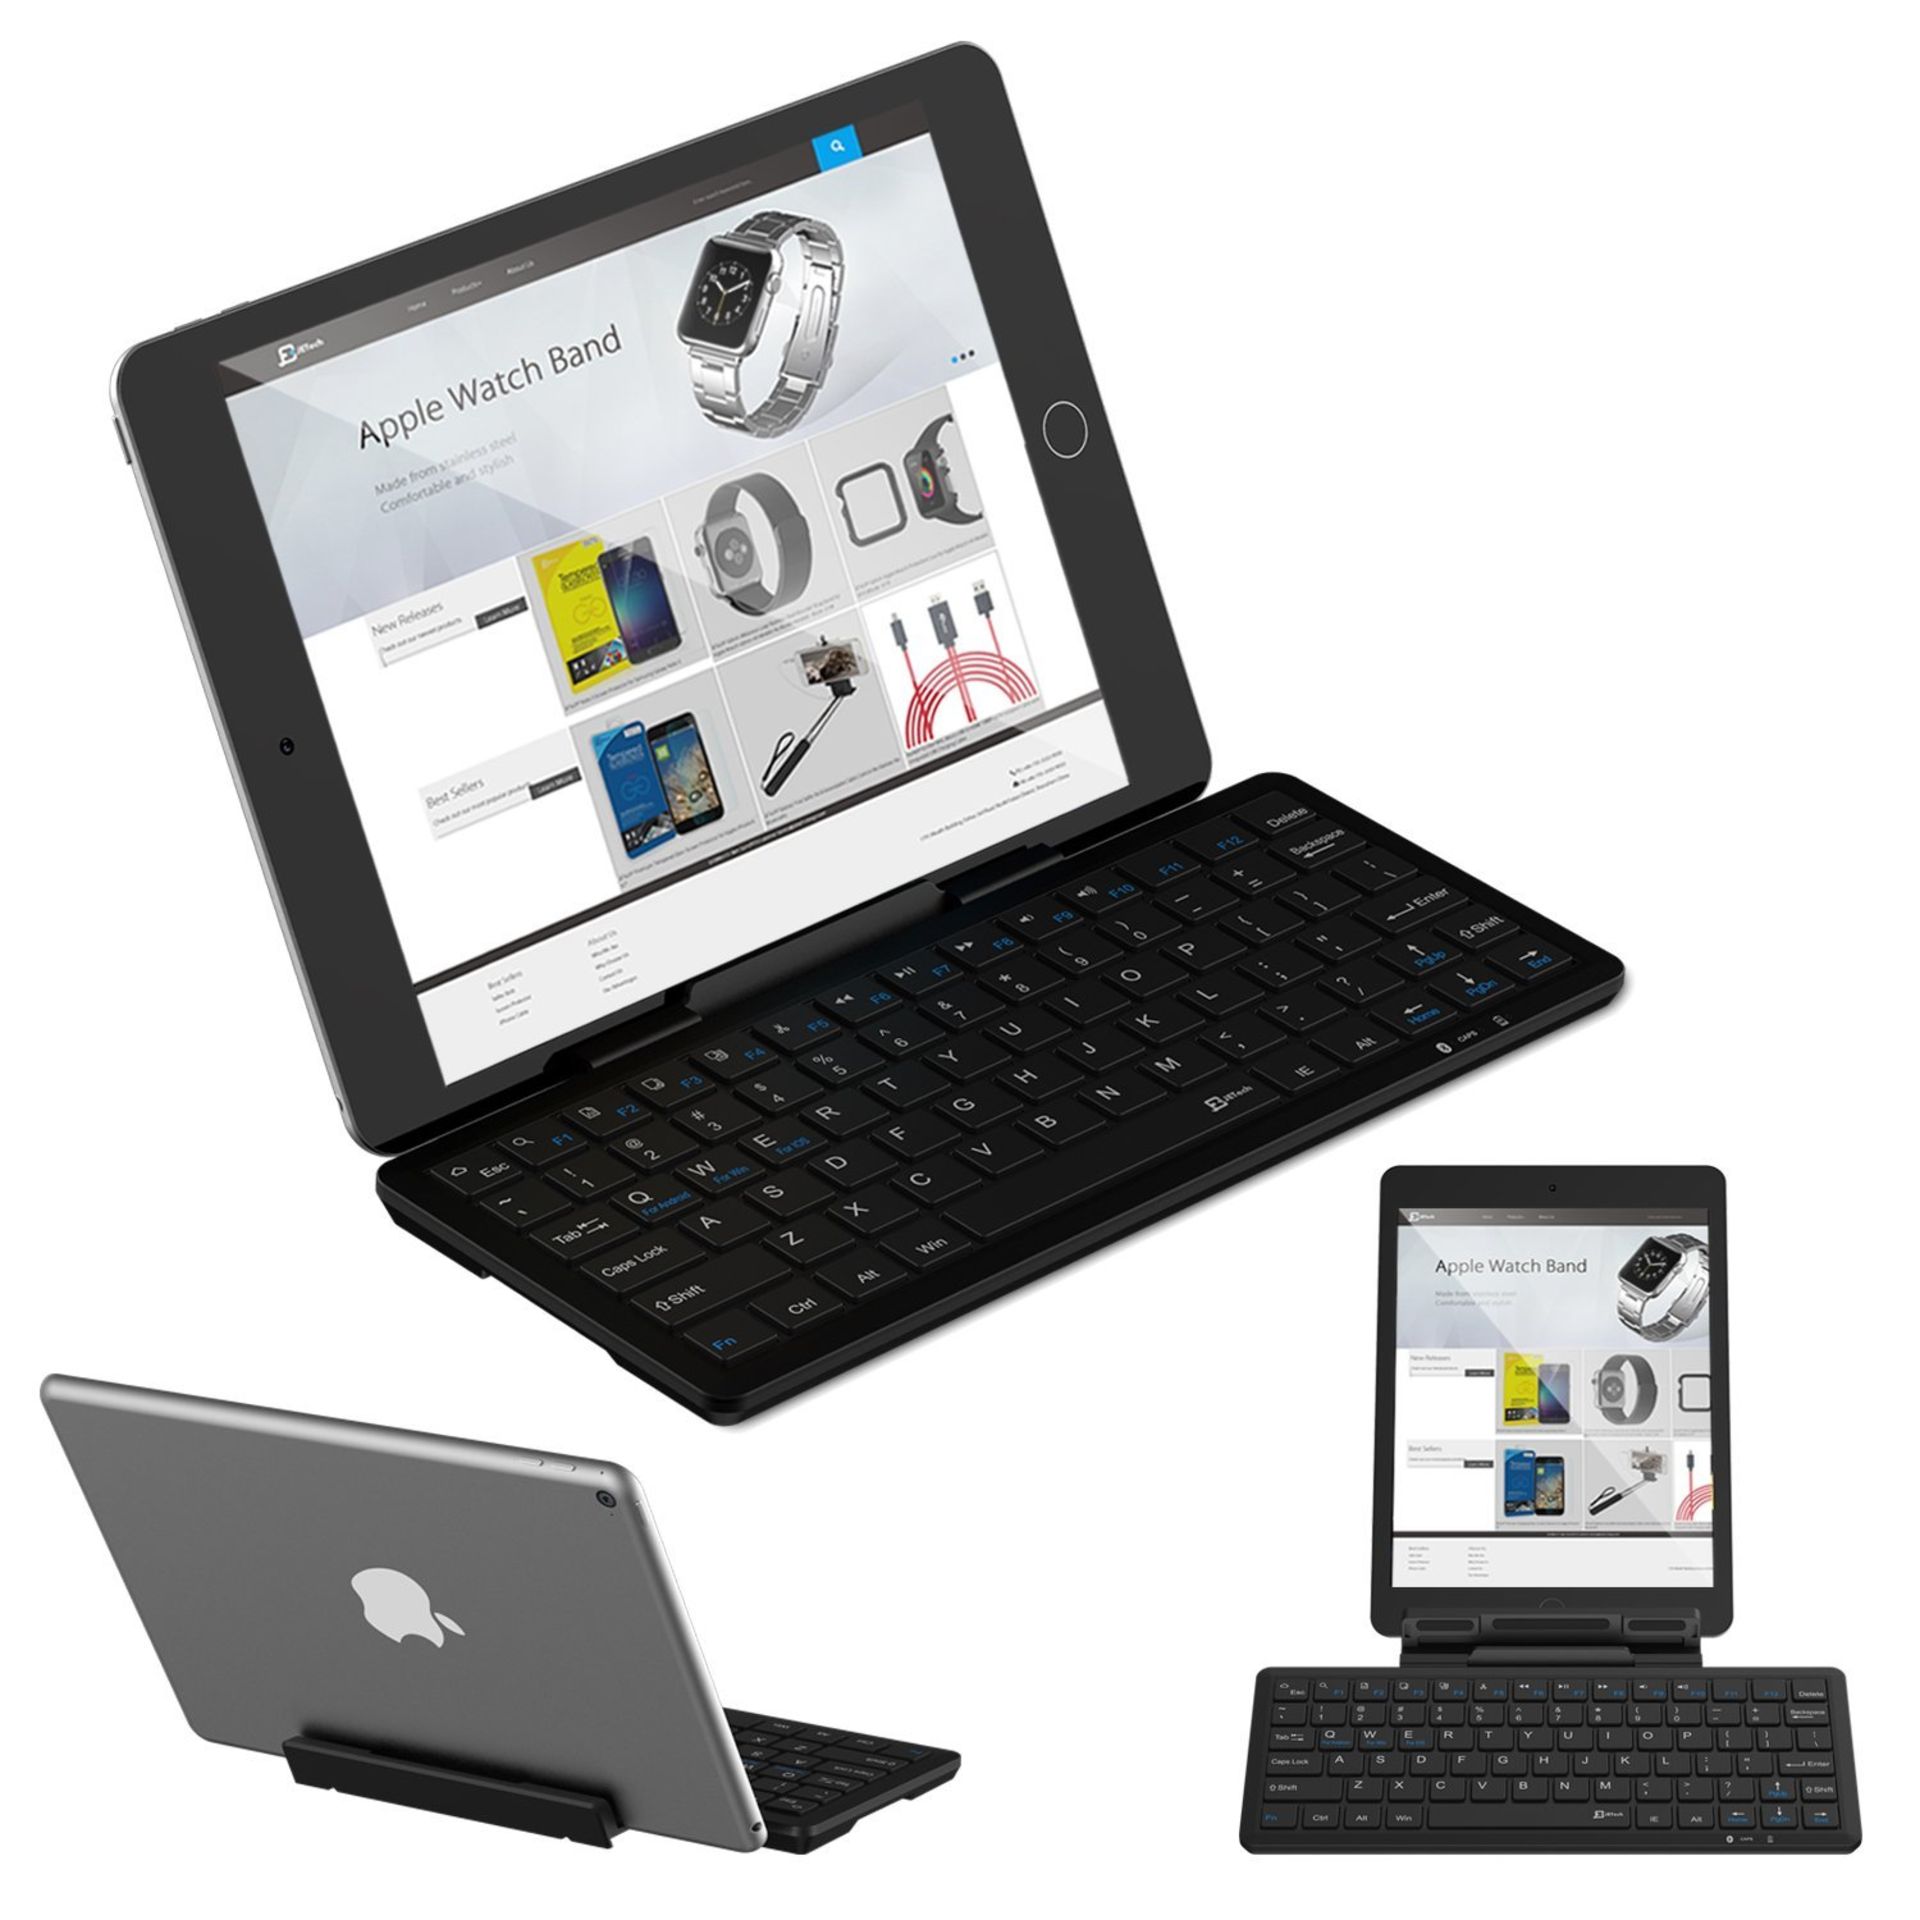 V Brand New Tragbare Universal Bluetooth Keyboard Amazon Price £14.95 X 2 YOUR BID PRICE TO BE